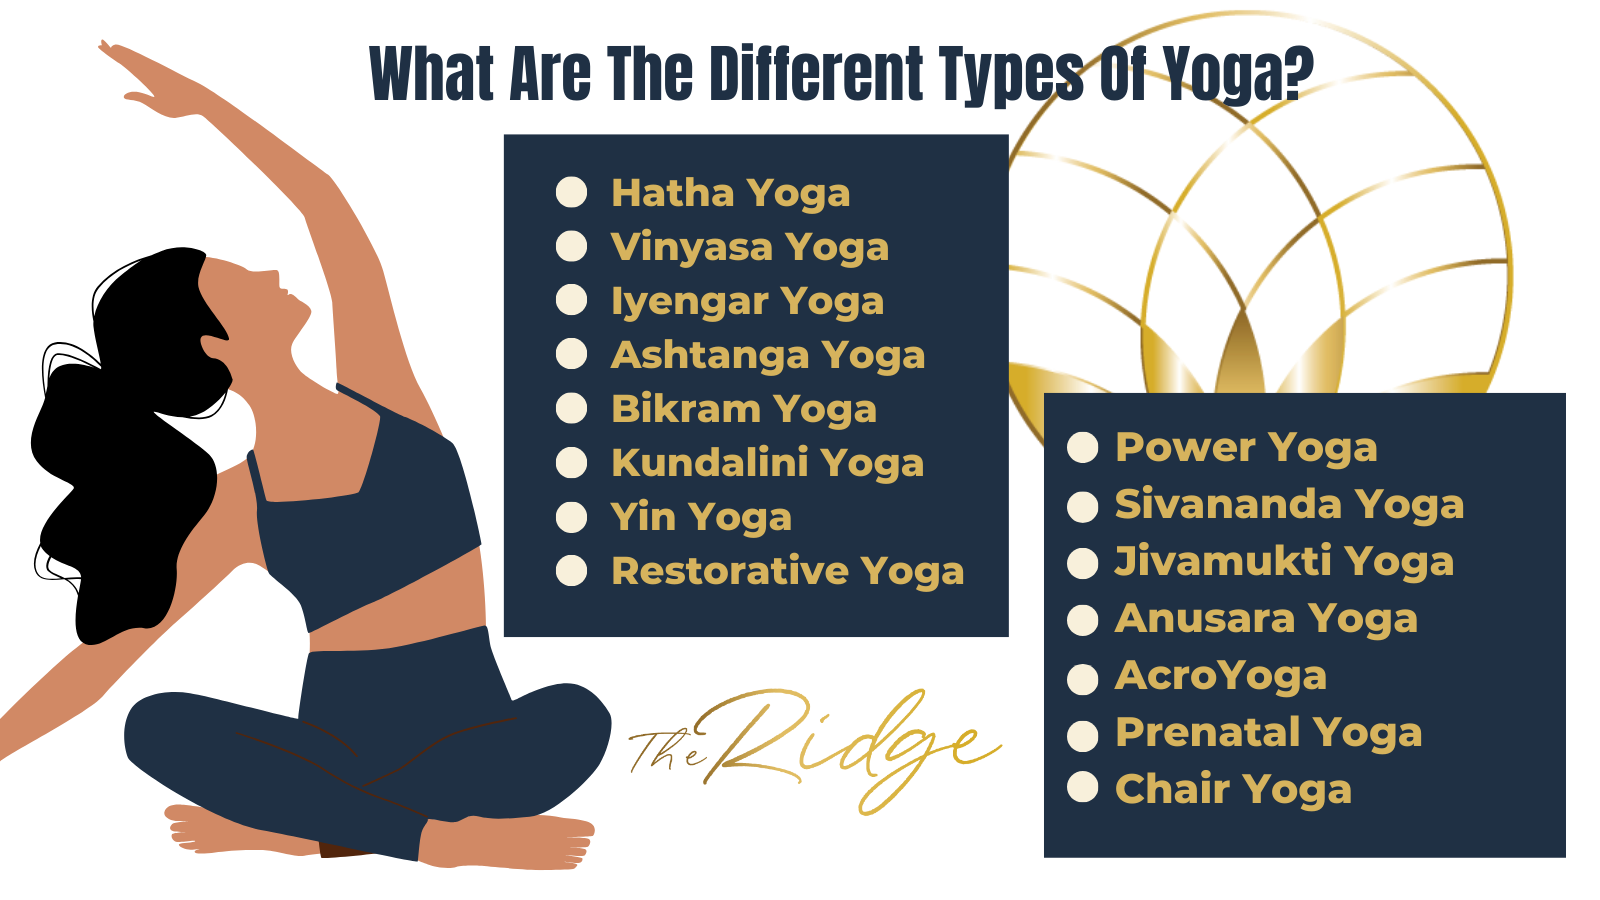 Chair Yoga - Present Wisdom Yoga